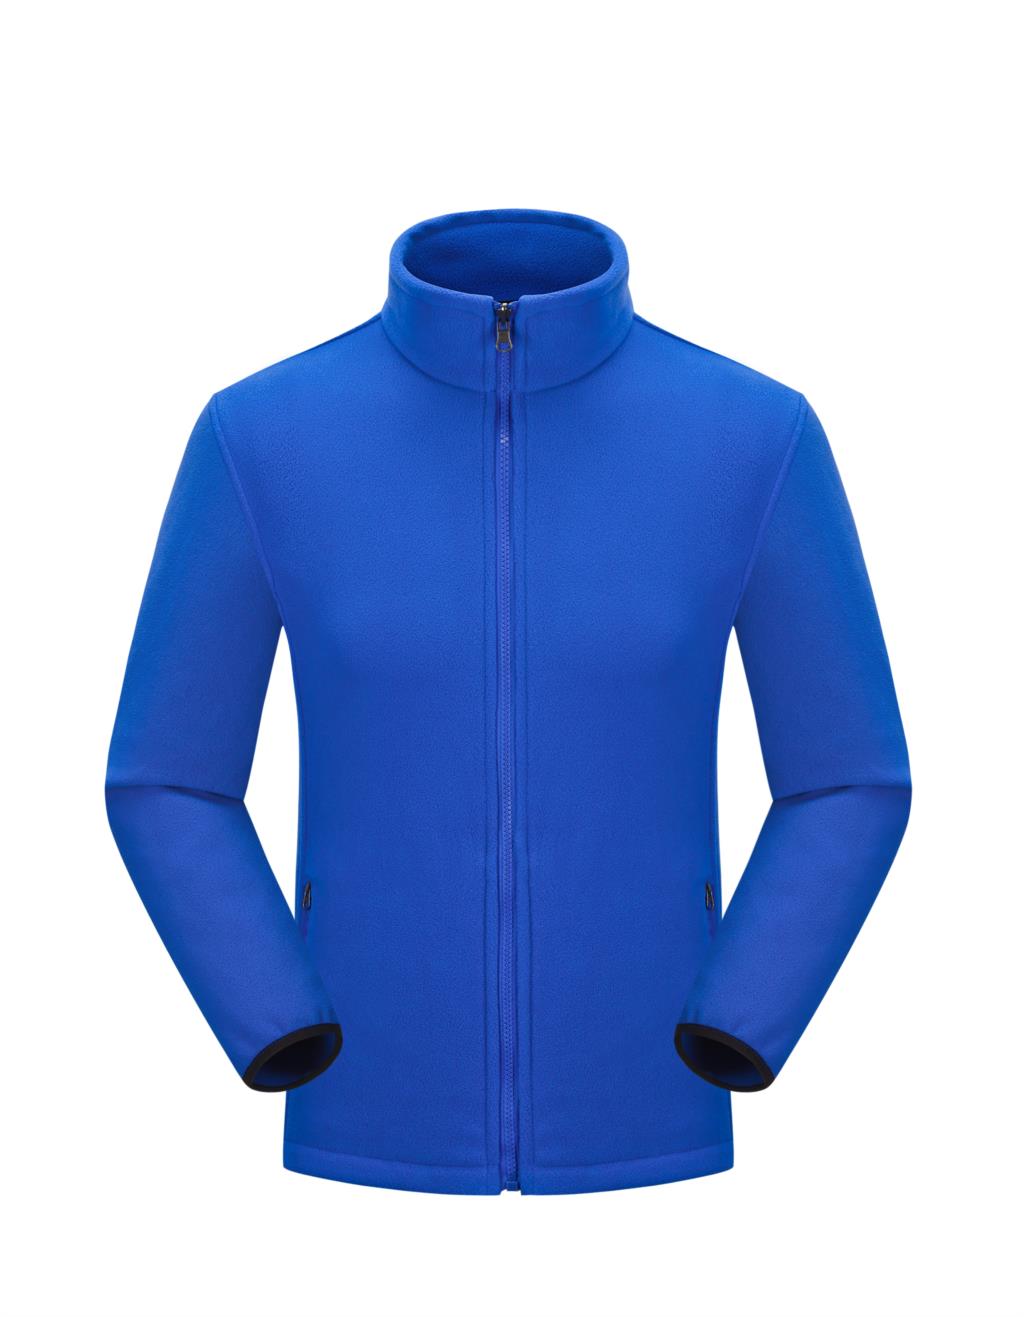 Buy royal-blue Women long sleeve Zip up Fleece Sweatshirts for Running